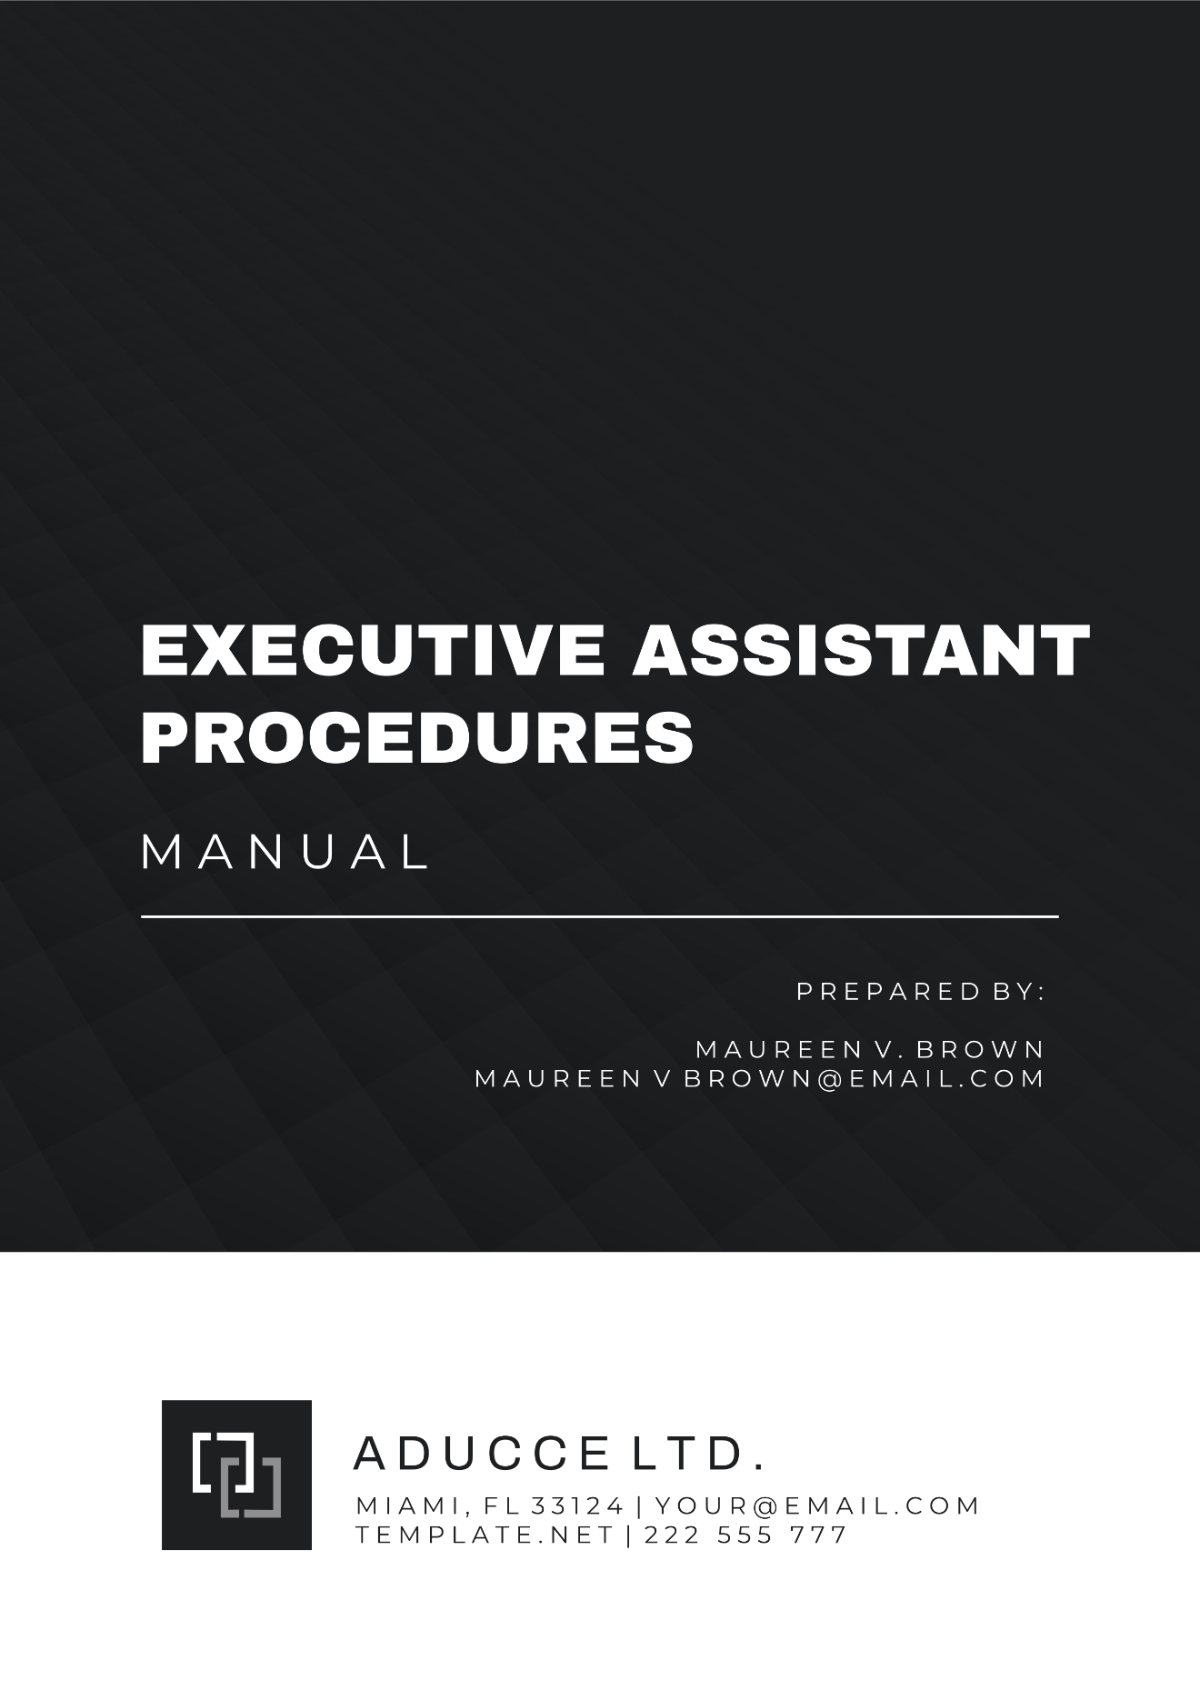 Executive Assistant Procedures Manual Template